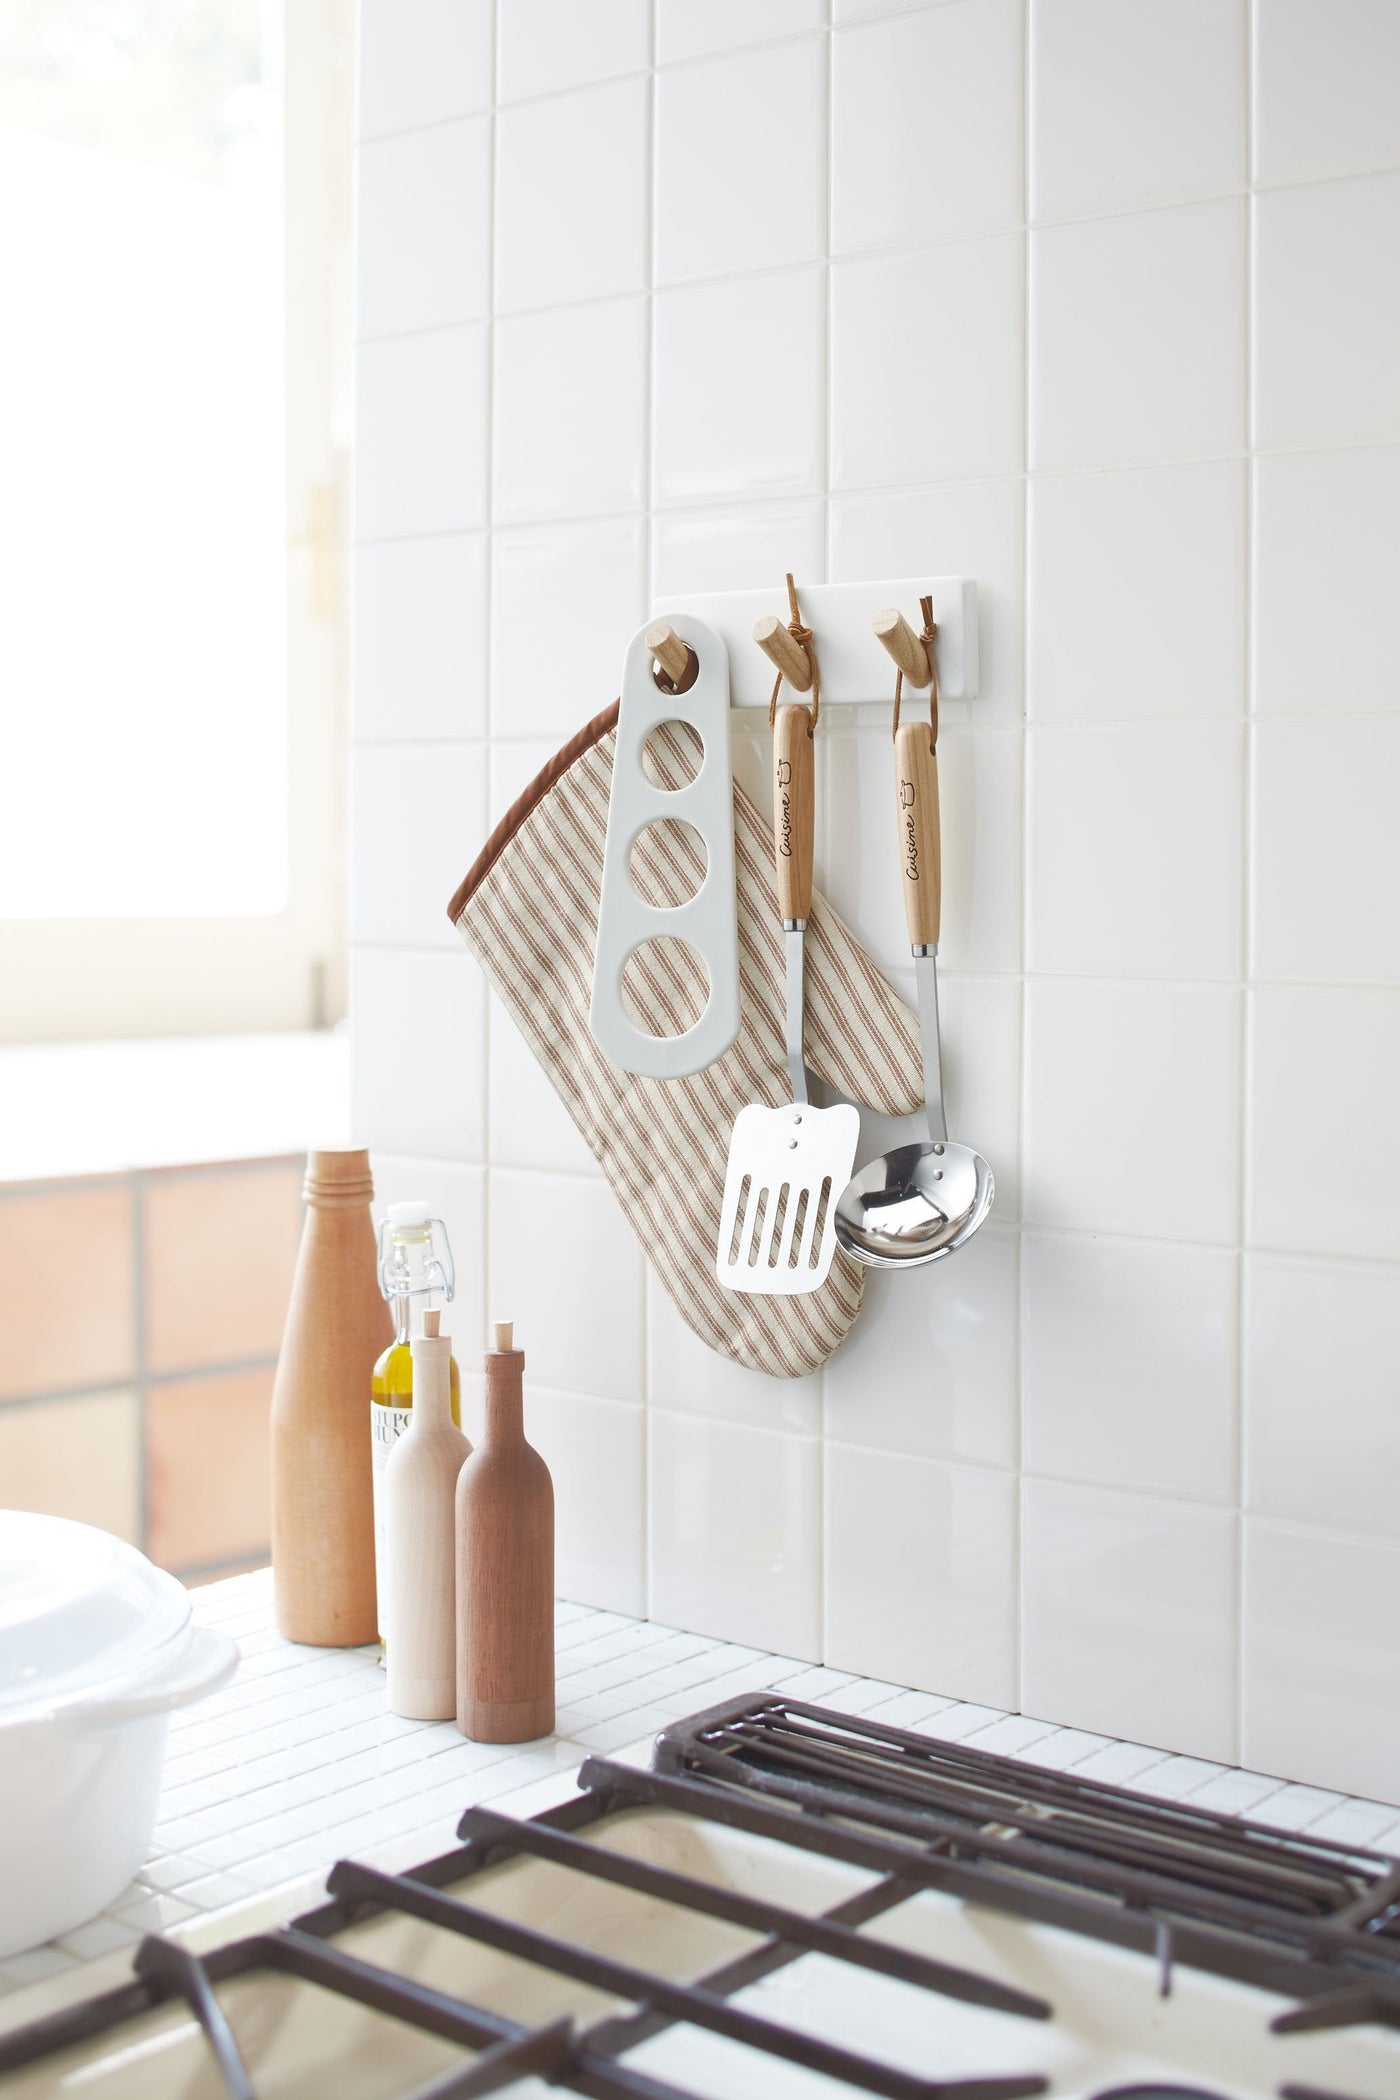 Yamazaki's magnetic peg rack holding cooking utensils above the sink.